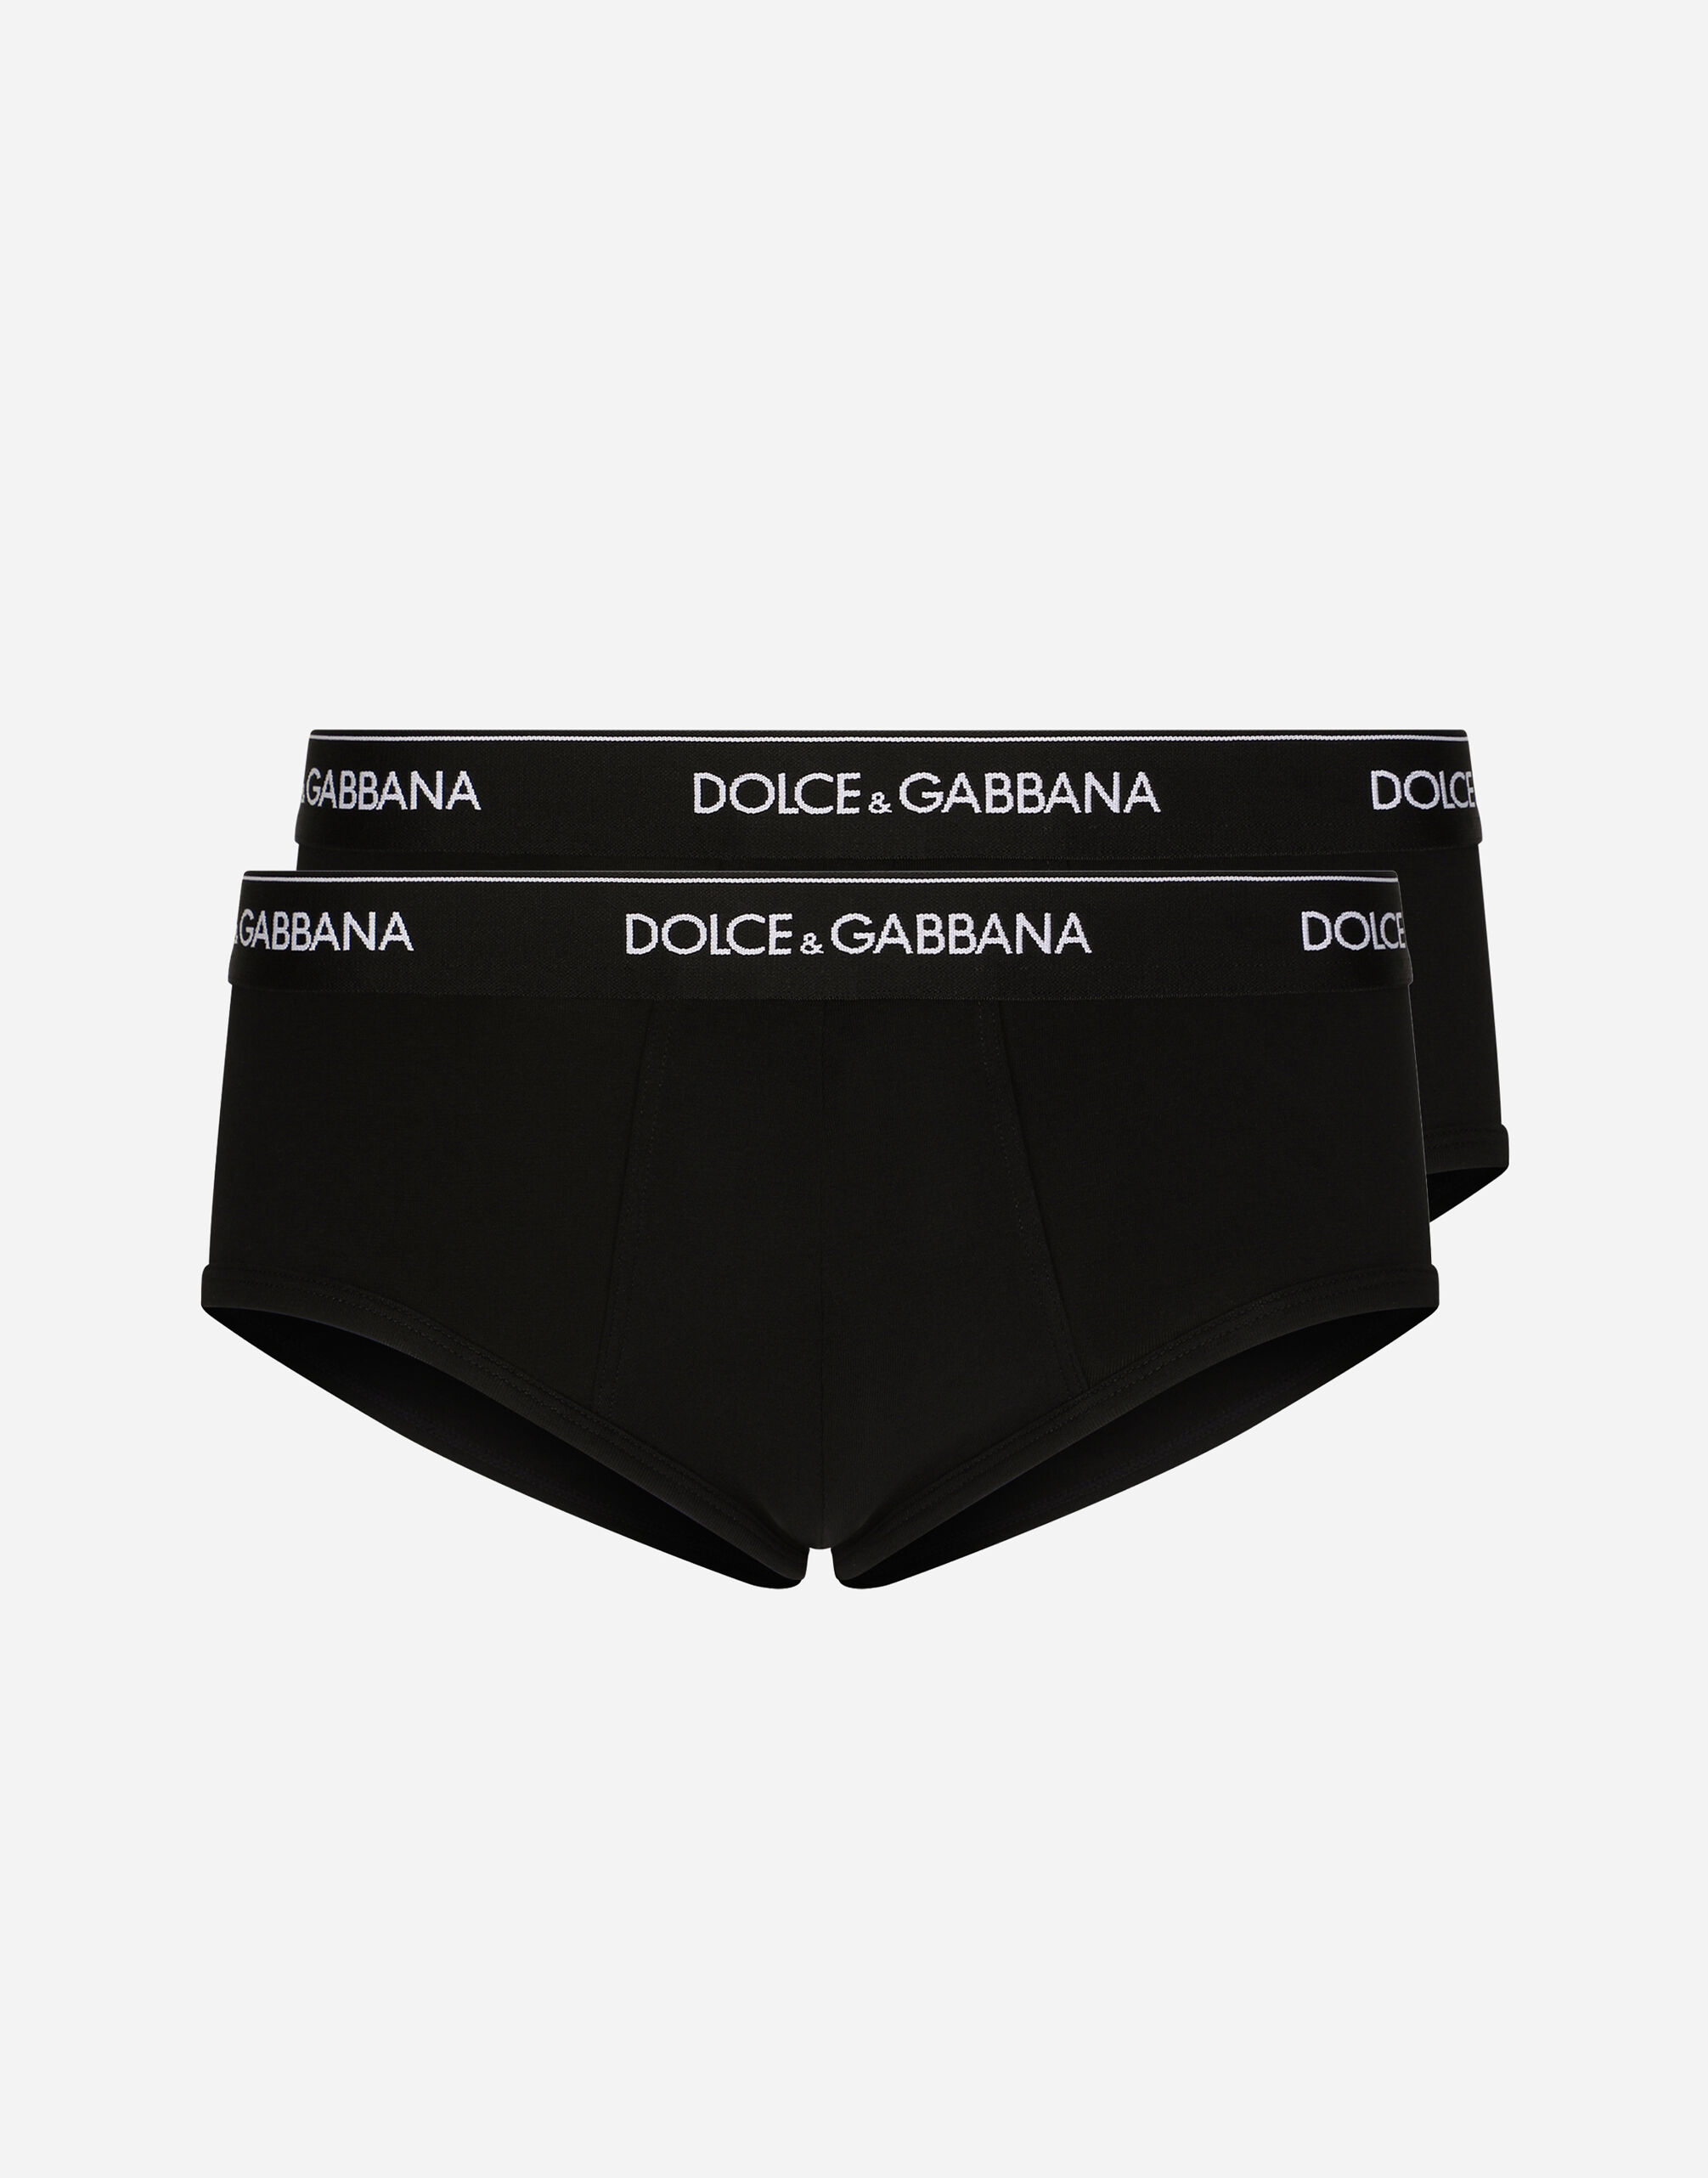 Seven Seconds - Dolce & Gabbana #Men #Underwear in #SevenSeconds